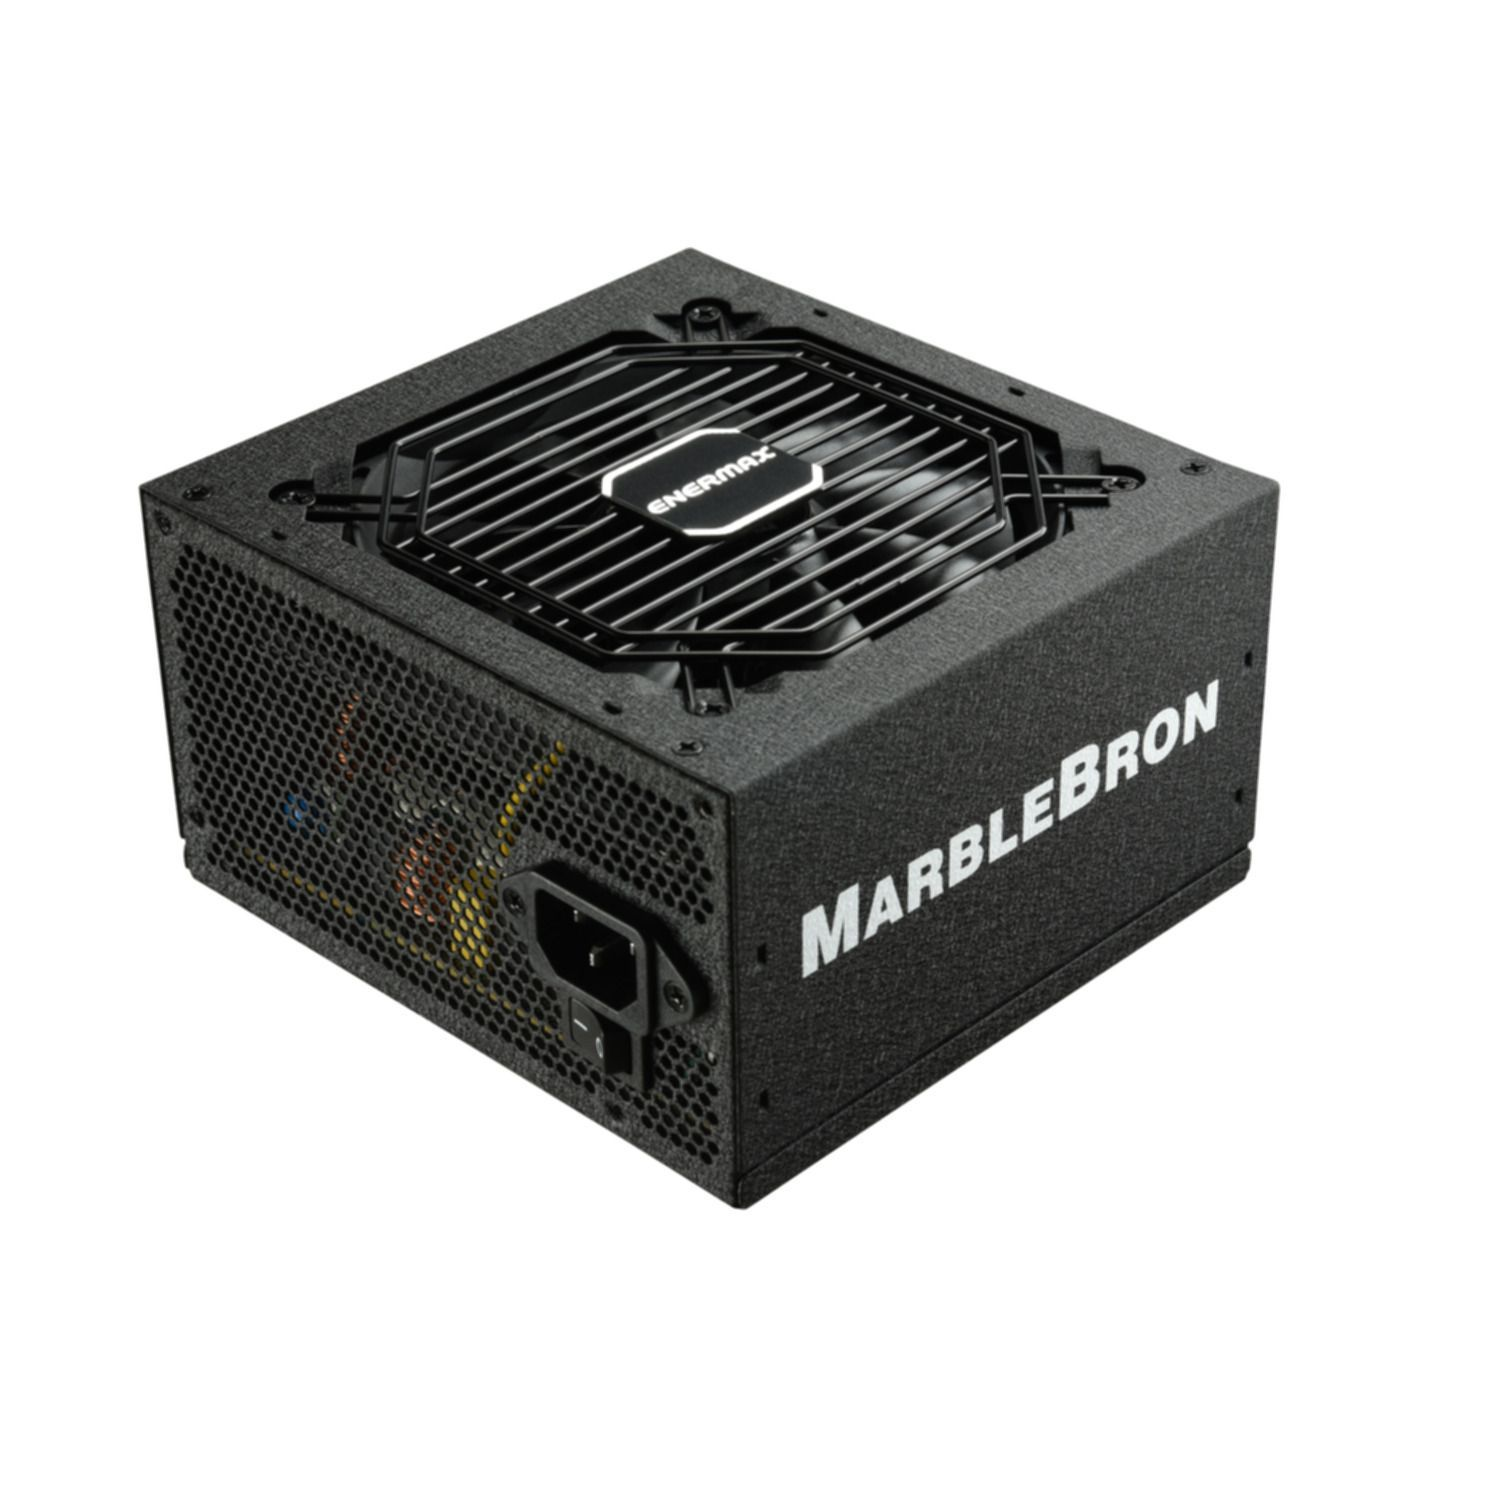 Watt 750 Netzteil ENERMAX PC MARBLEBRON